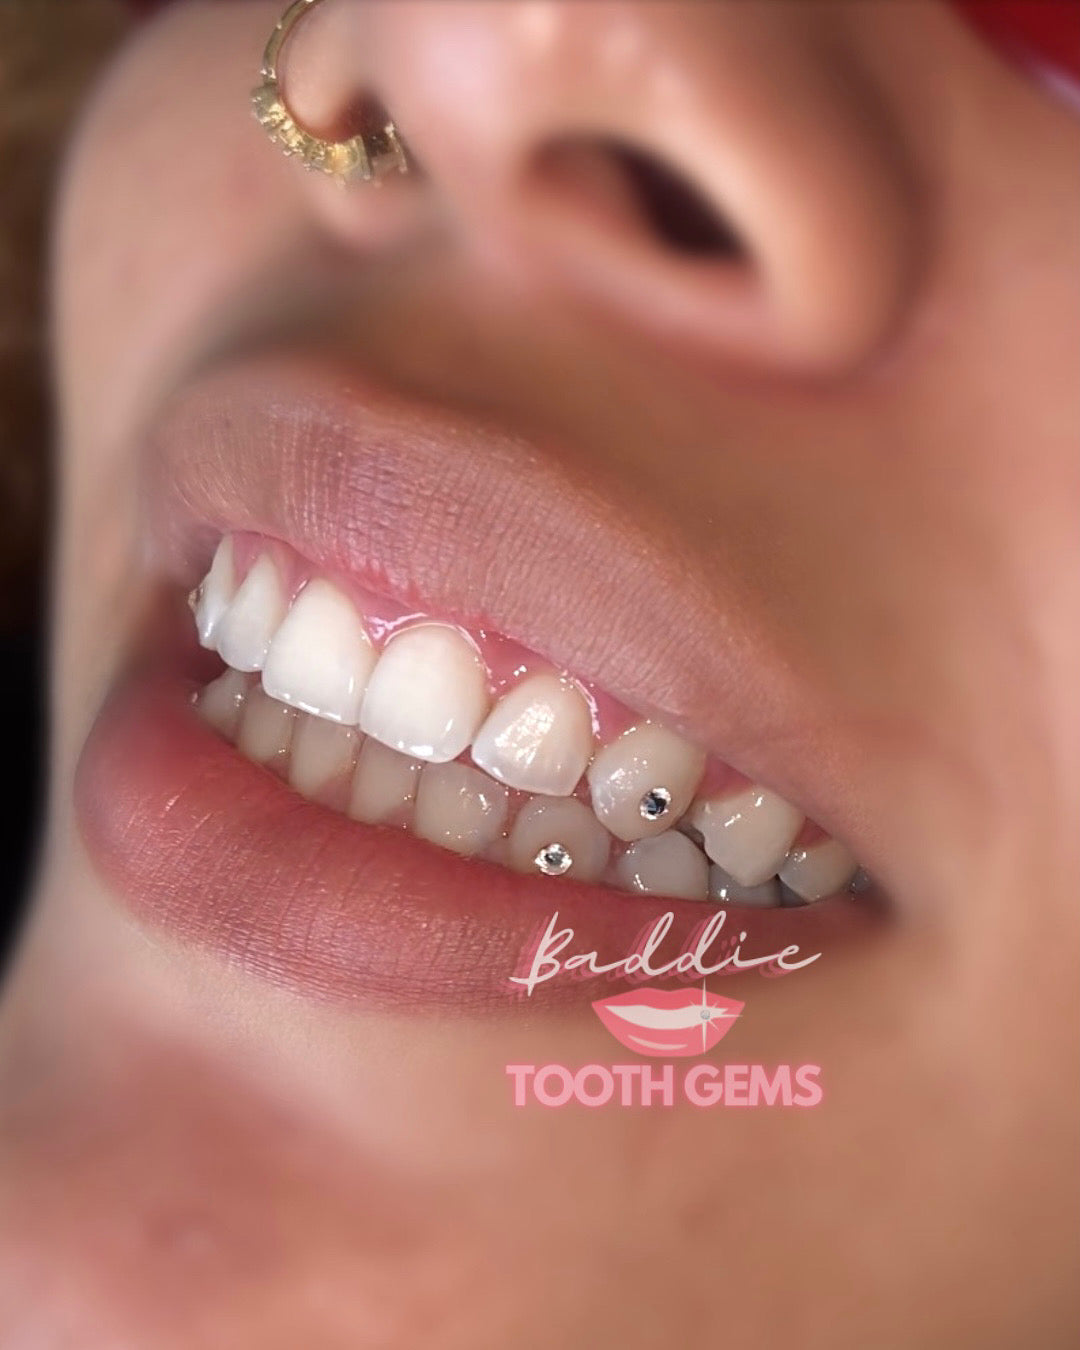 Crystal tooth gems